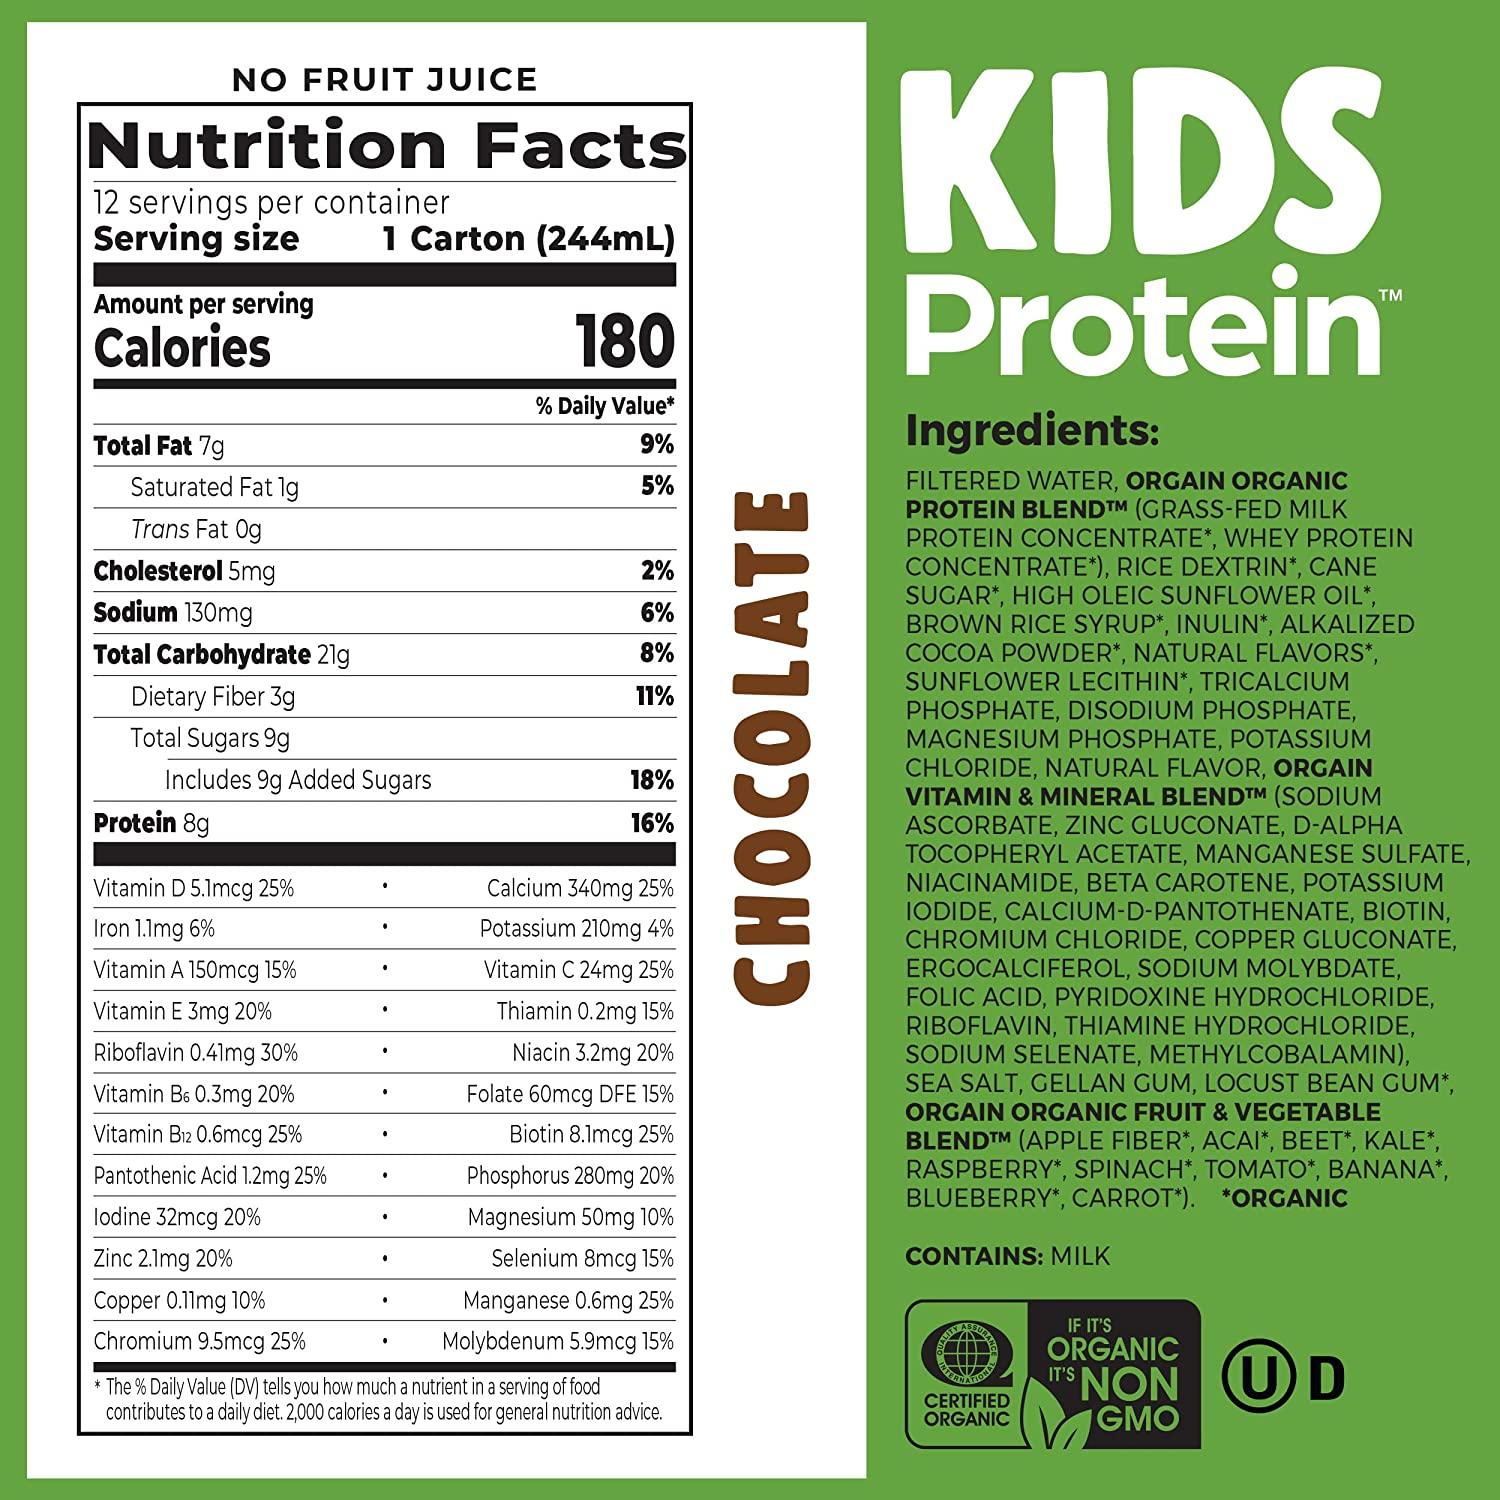 Orgain Organic Nutrition Shake - Chocolate Kids - 8.25 fl oz - Case of 12